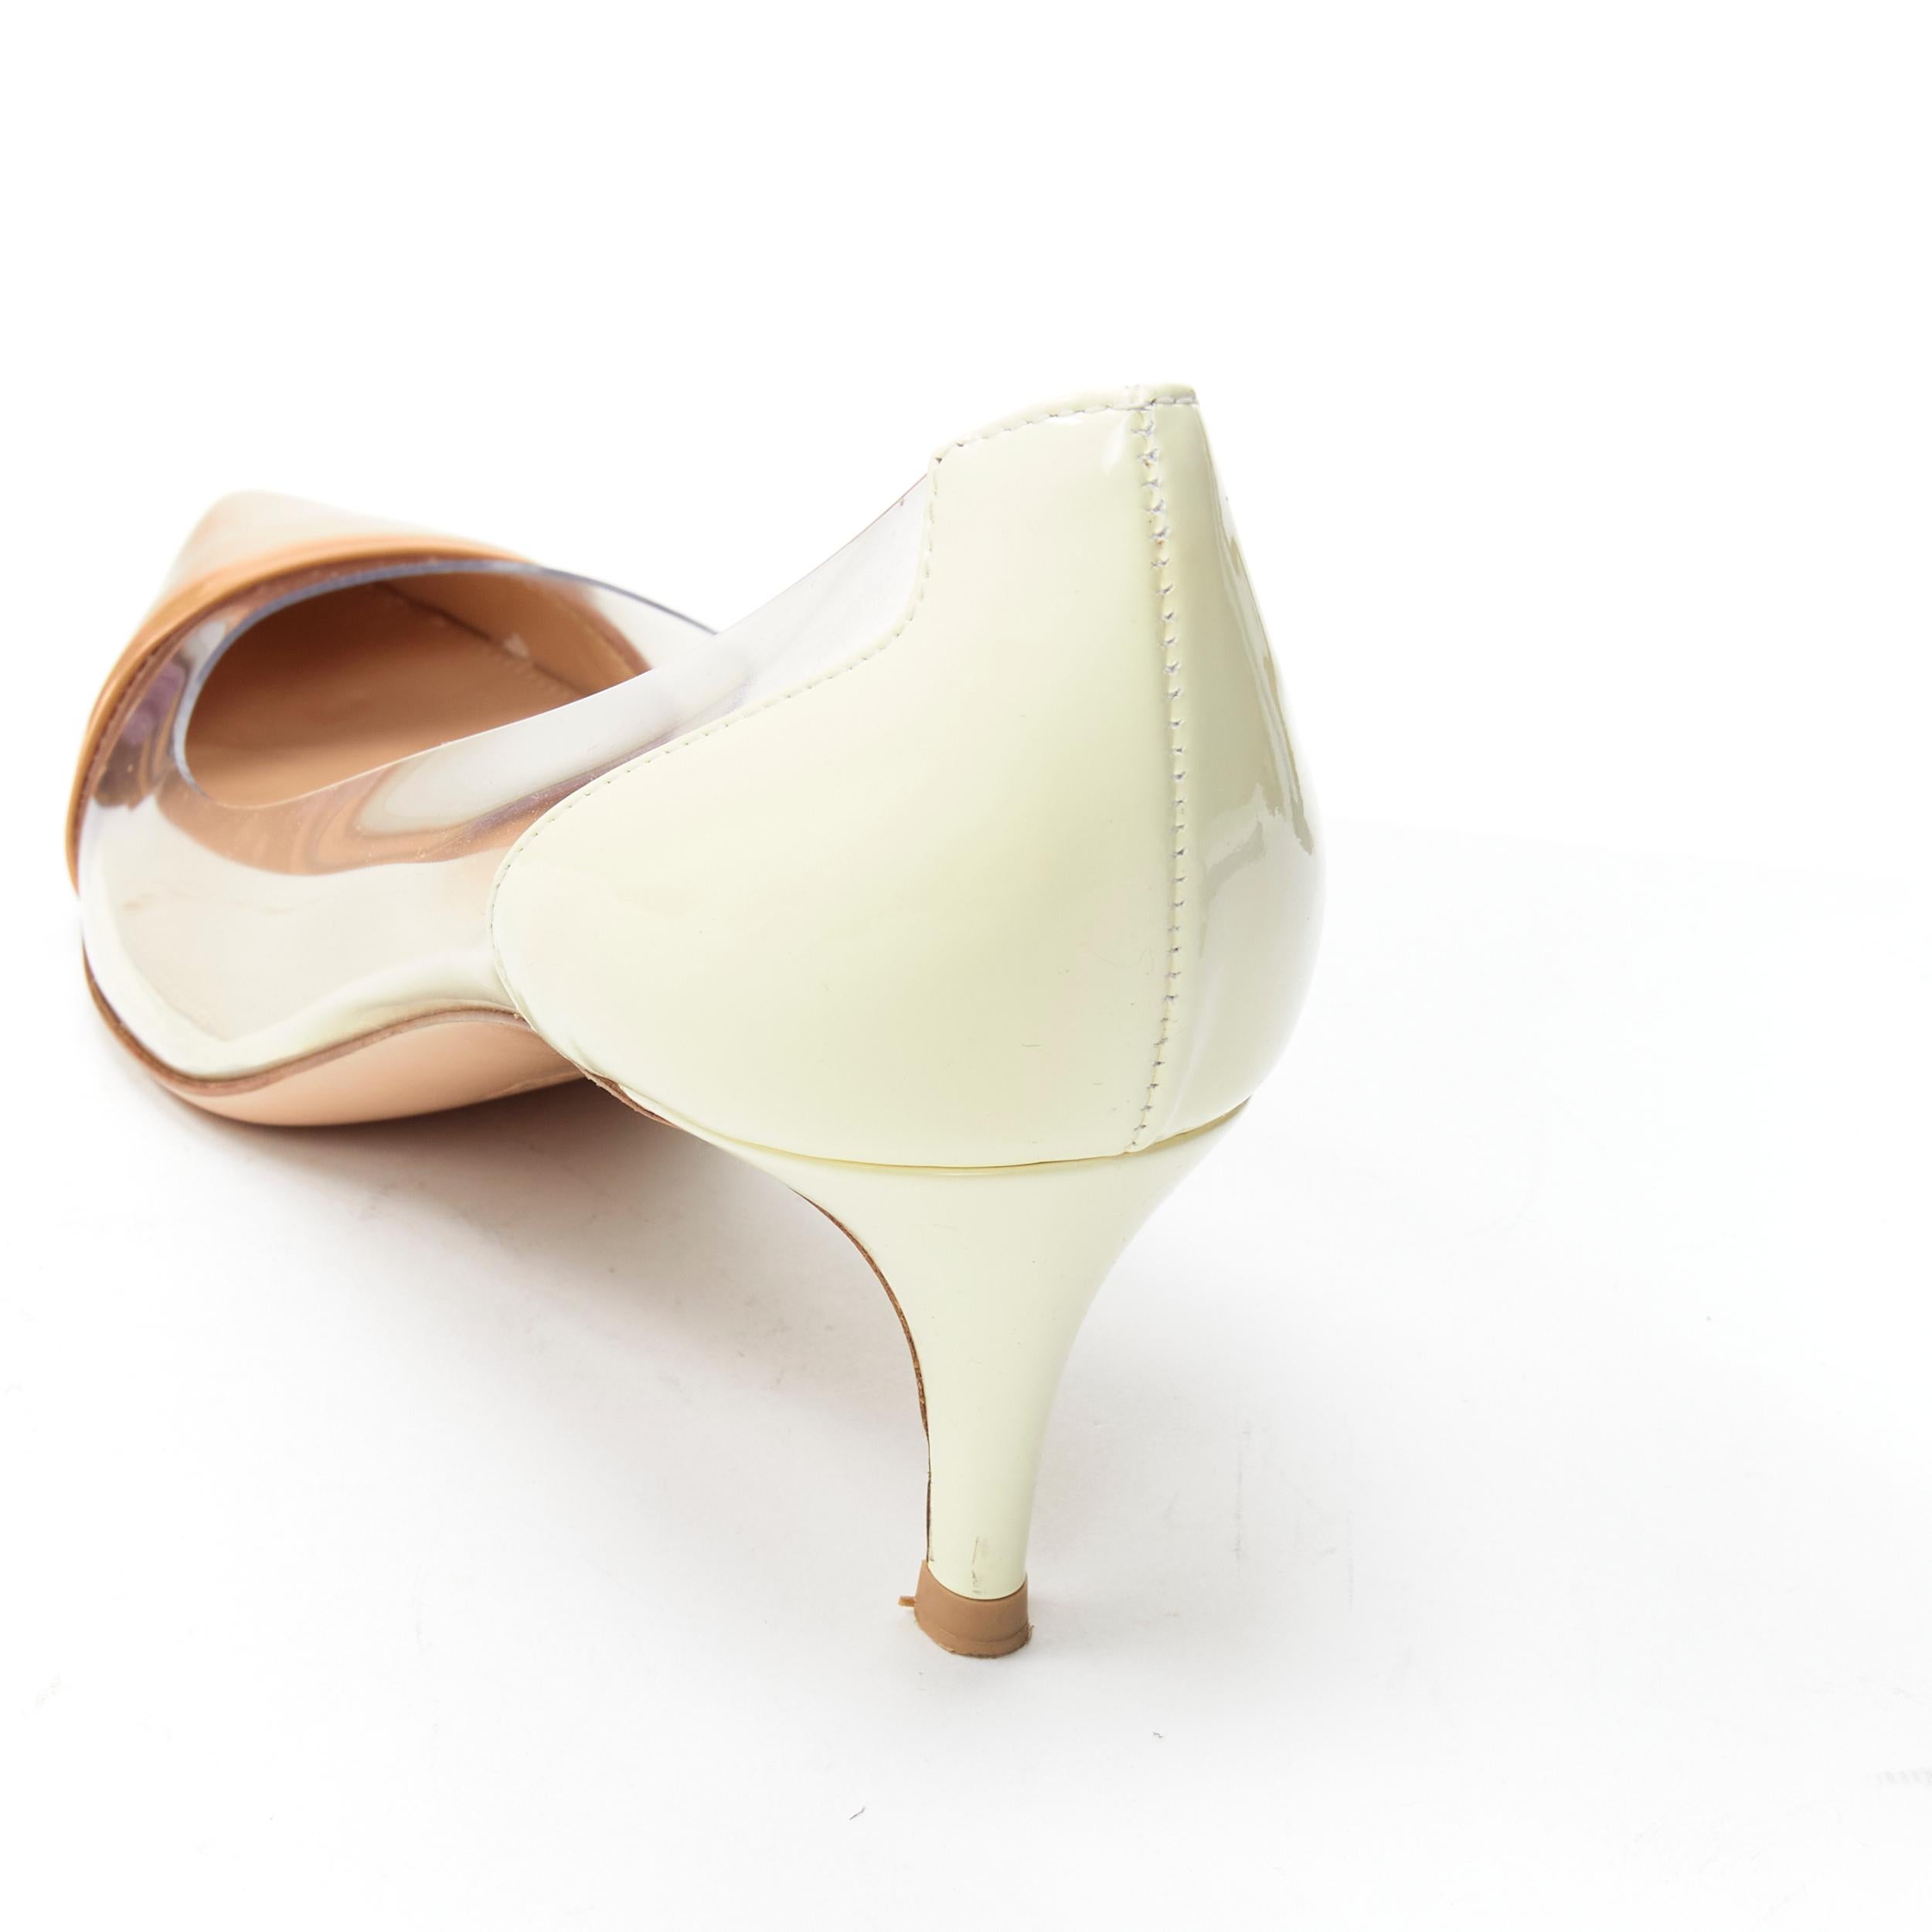 GIANVITO ROSSI Plexi Vernice Powder cream patent PVC  toe cap heel pump EU37.5 For Sale 1